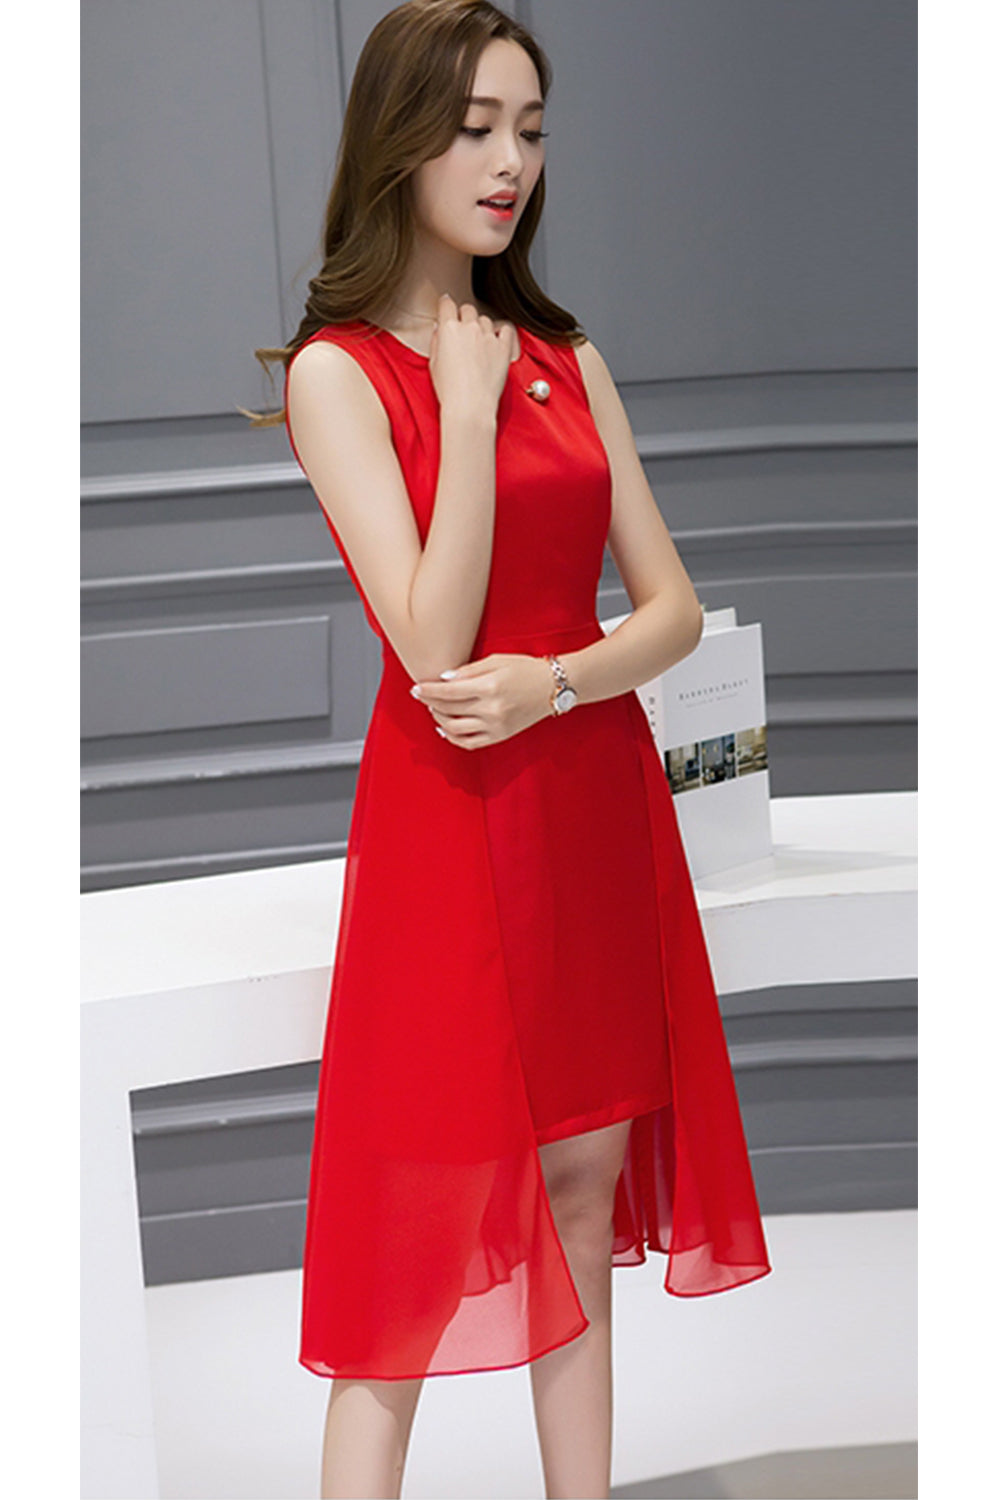 Ketty More Women Fashion Solid Color Irregular Skirt Dress-KMWD463